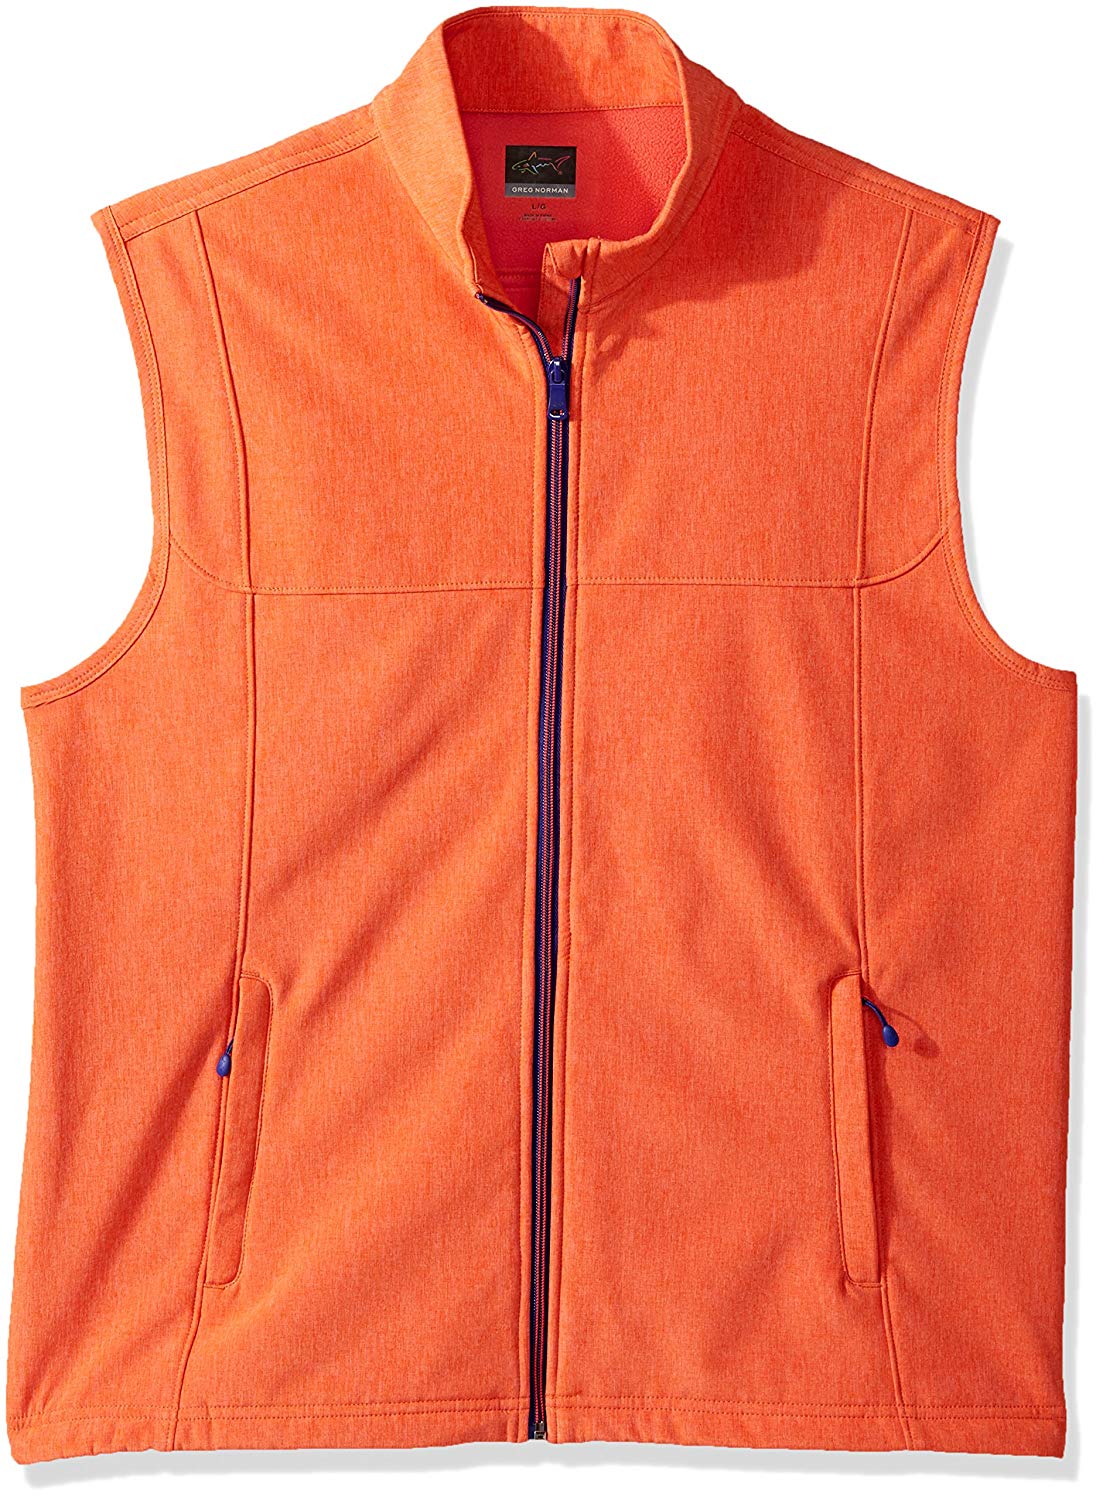 Greg Norman Mens Fashion Tech Golf Vests